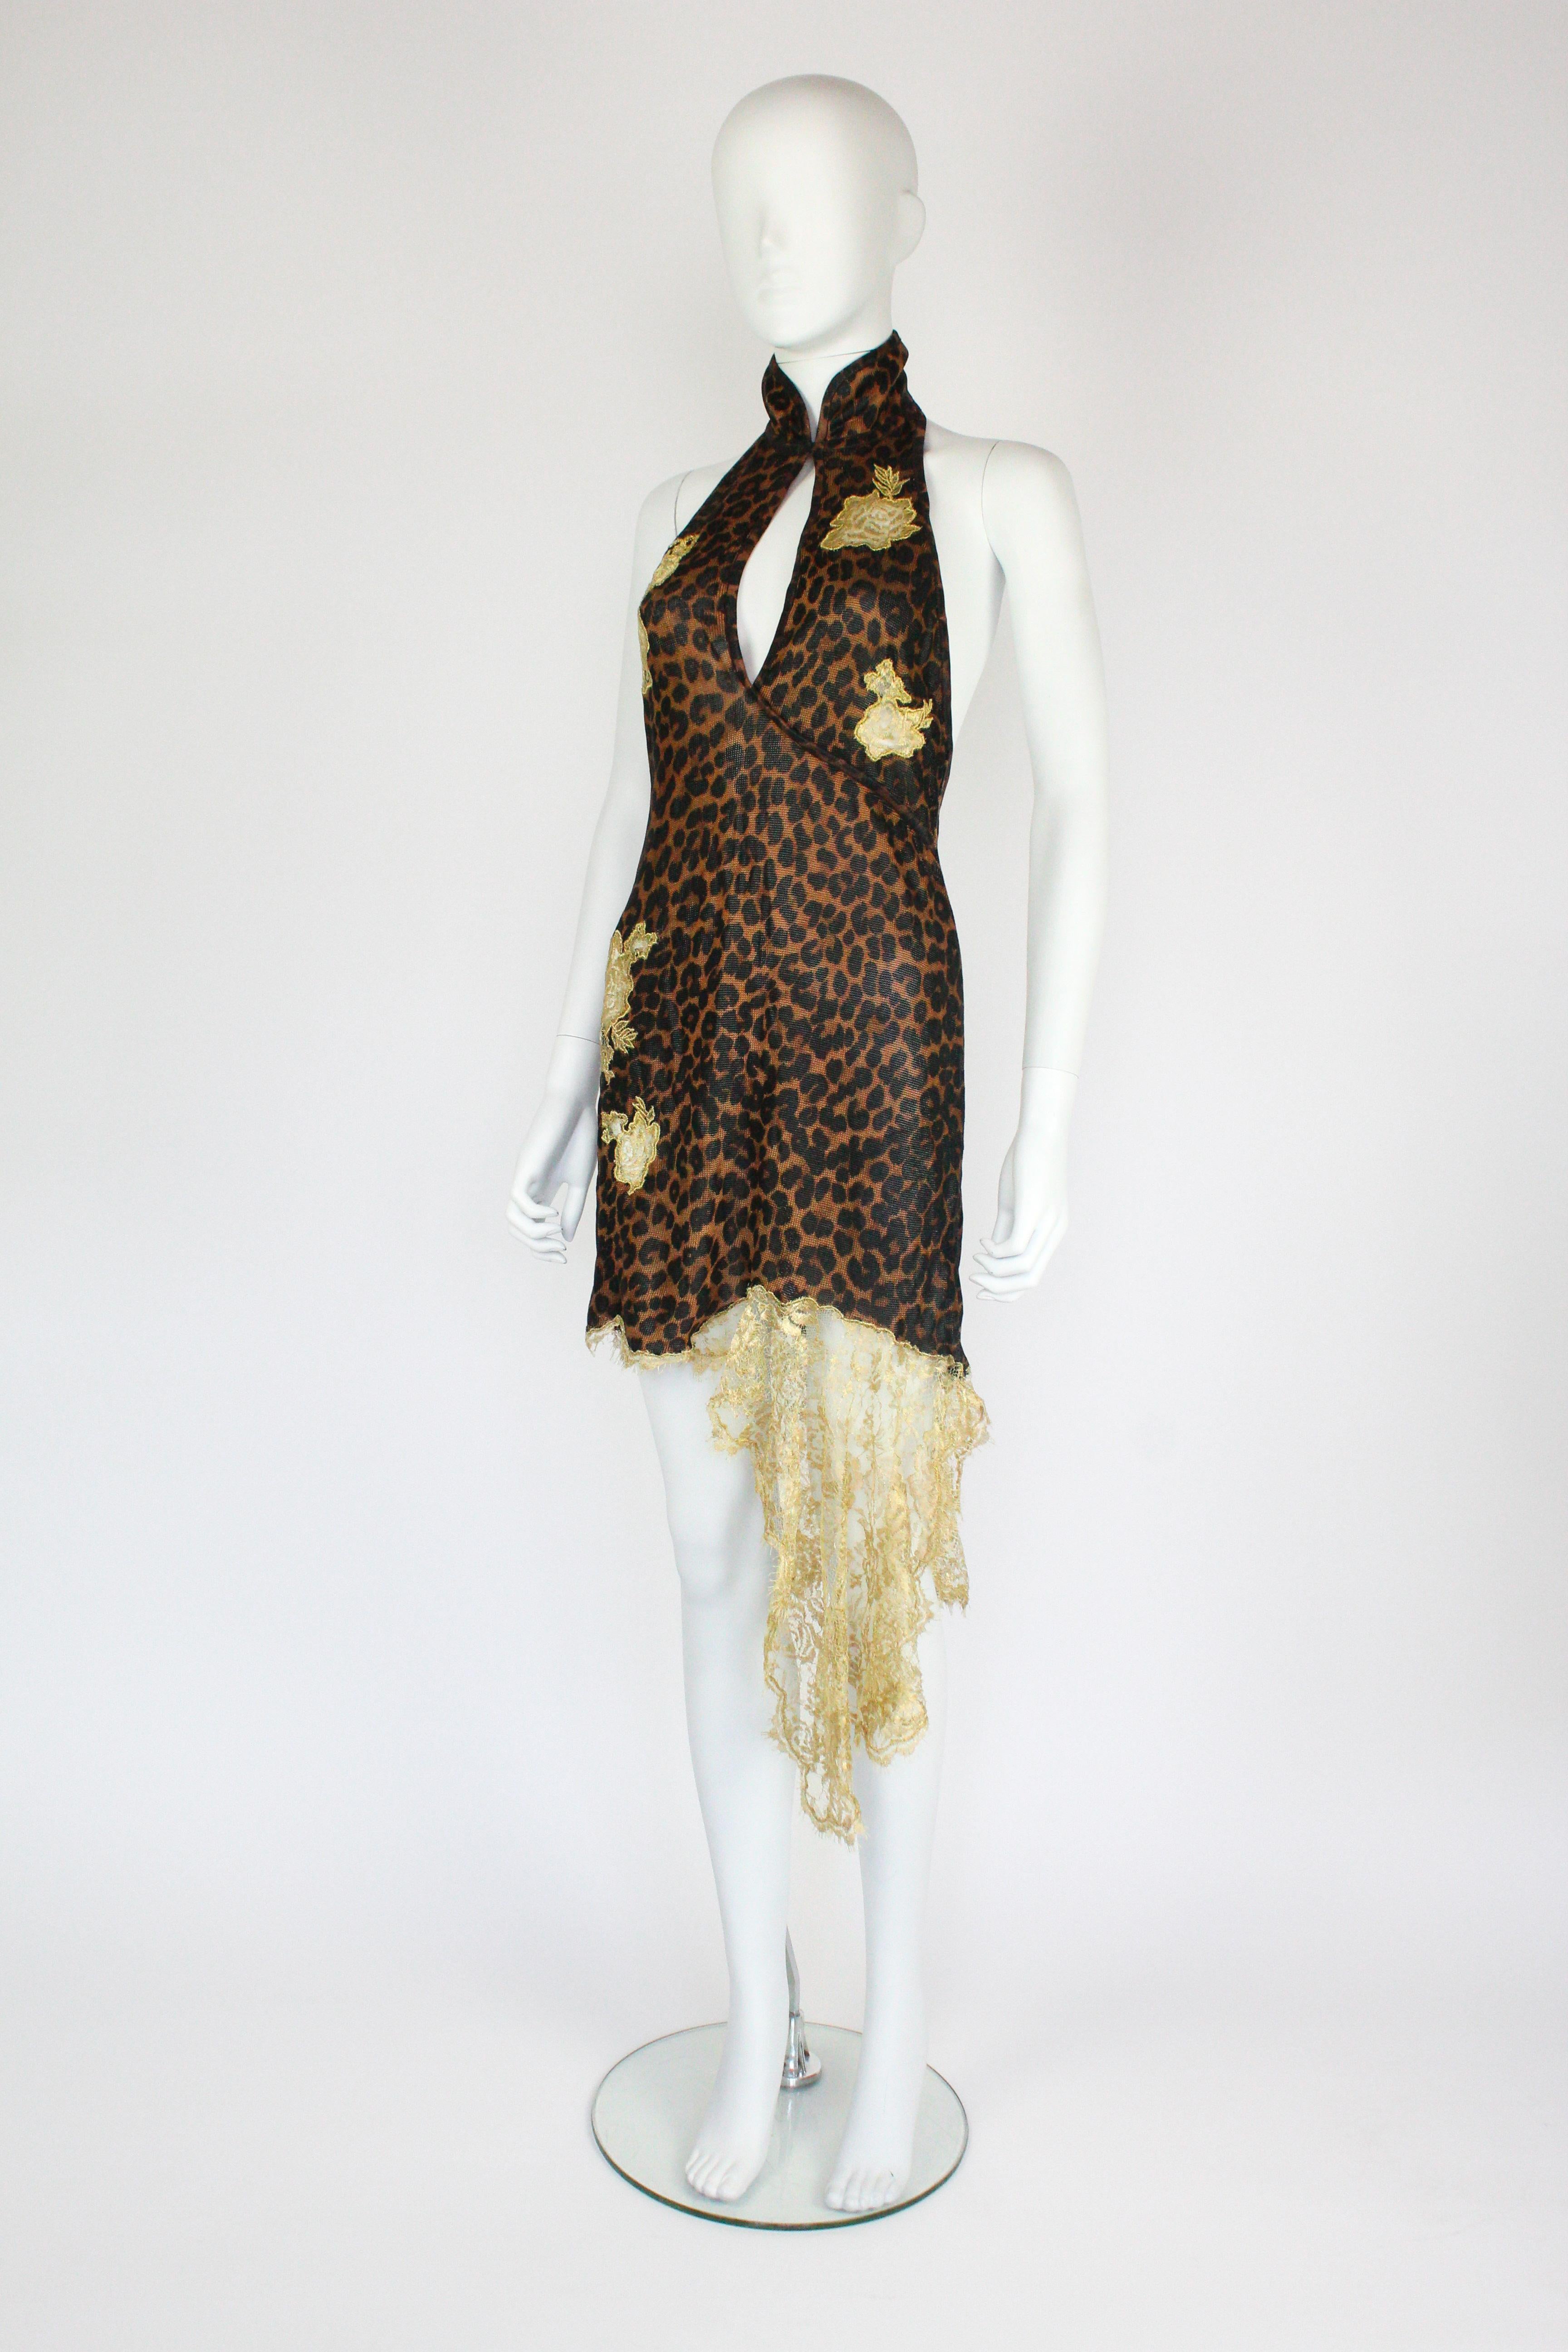 Christian Dior by John Galliano Leopard Dress F/W 2000 3